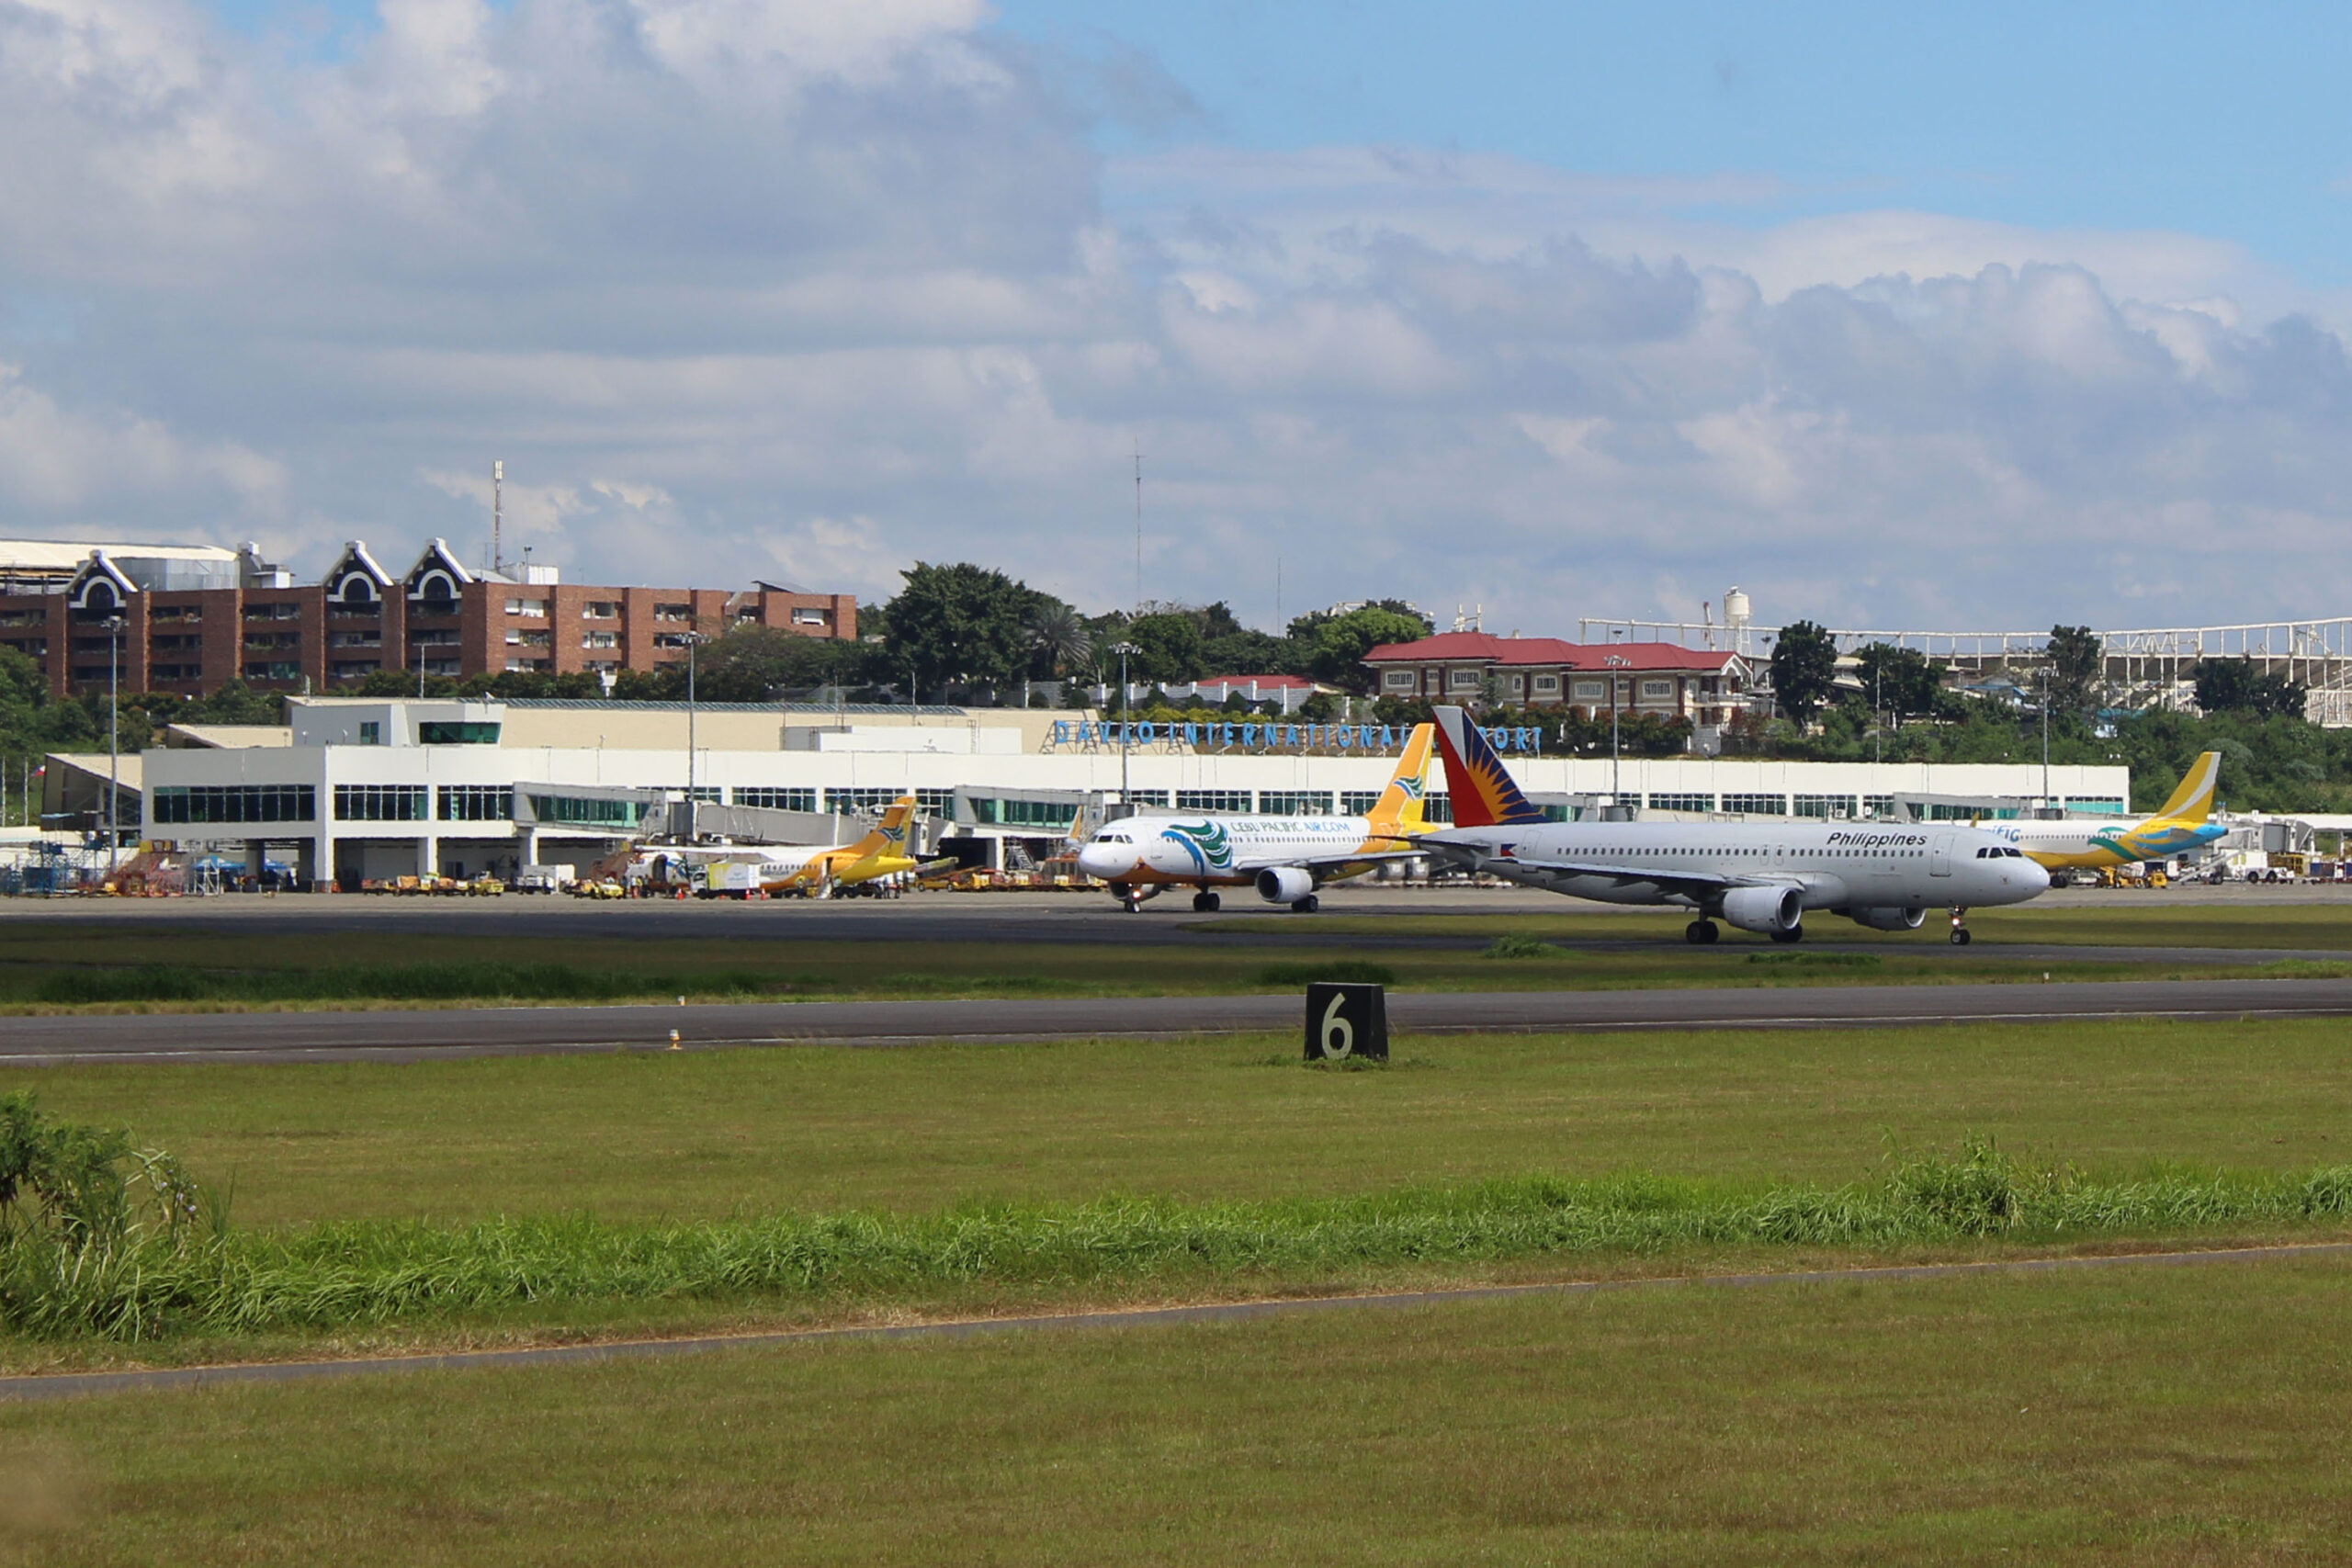 Runway repairs at Davao Airport wrap up ahead of schedule